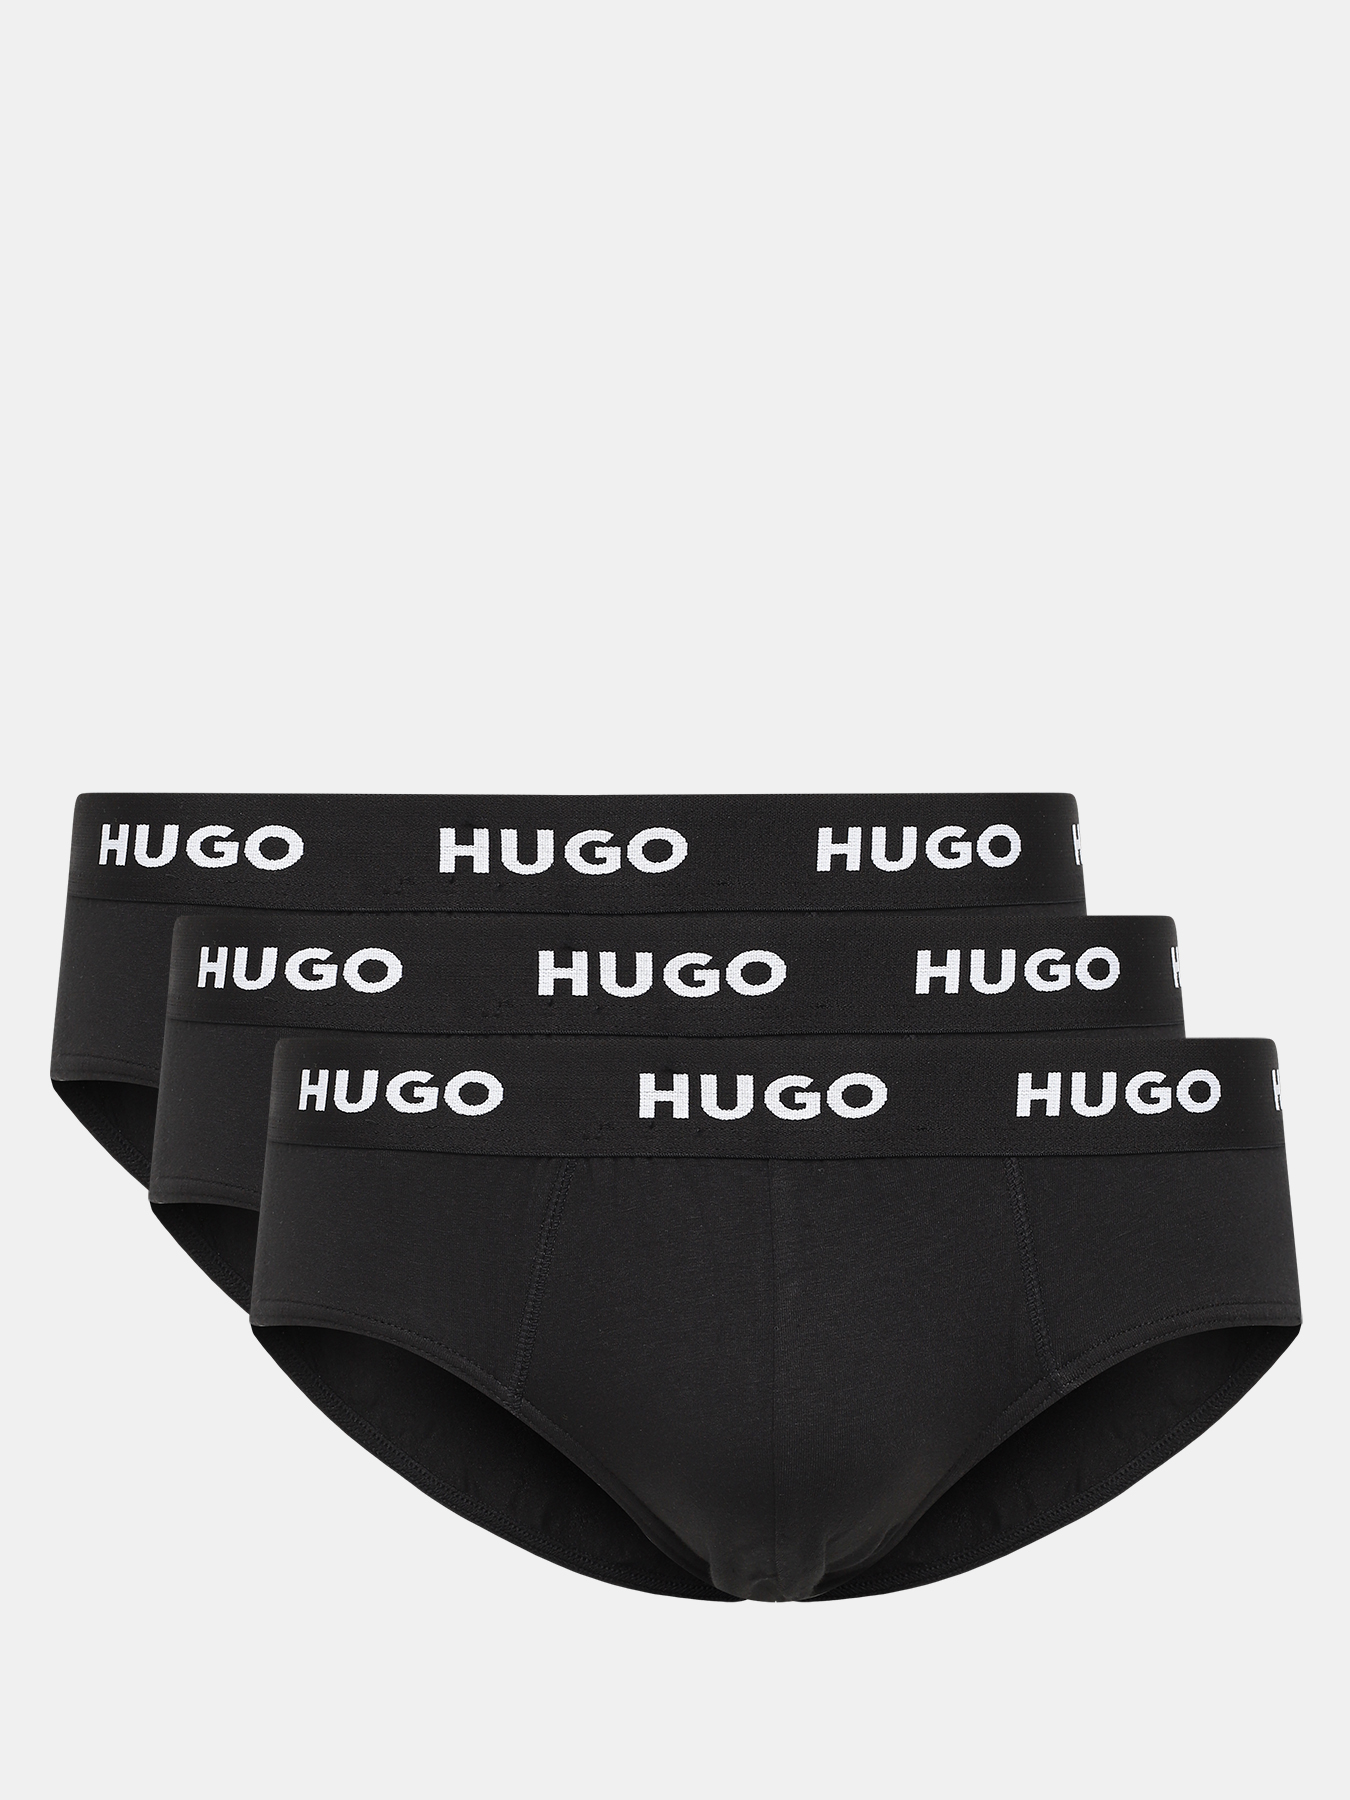 Hugo размеры. Hugo мужские трусы брифы. Нижнее белье Hugo Love. Trunk Triplet Boss Hugo. Hugo Triplet Pack briefs Slips.